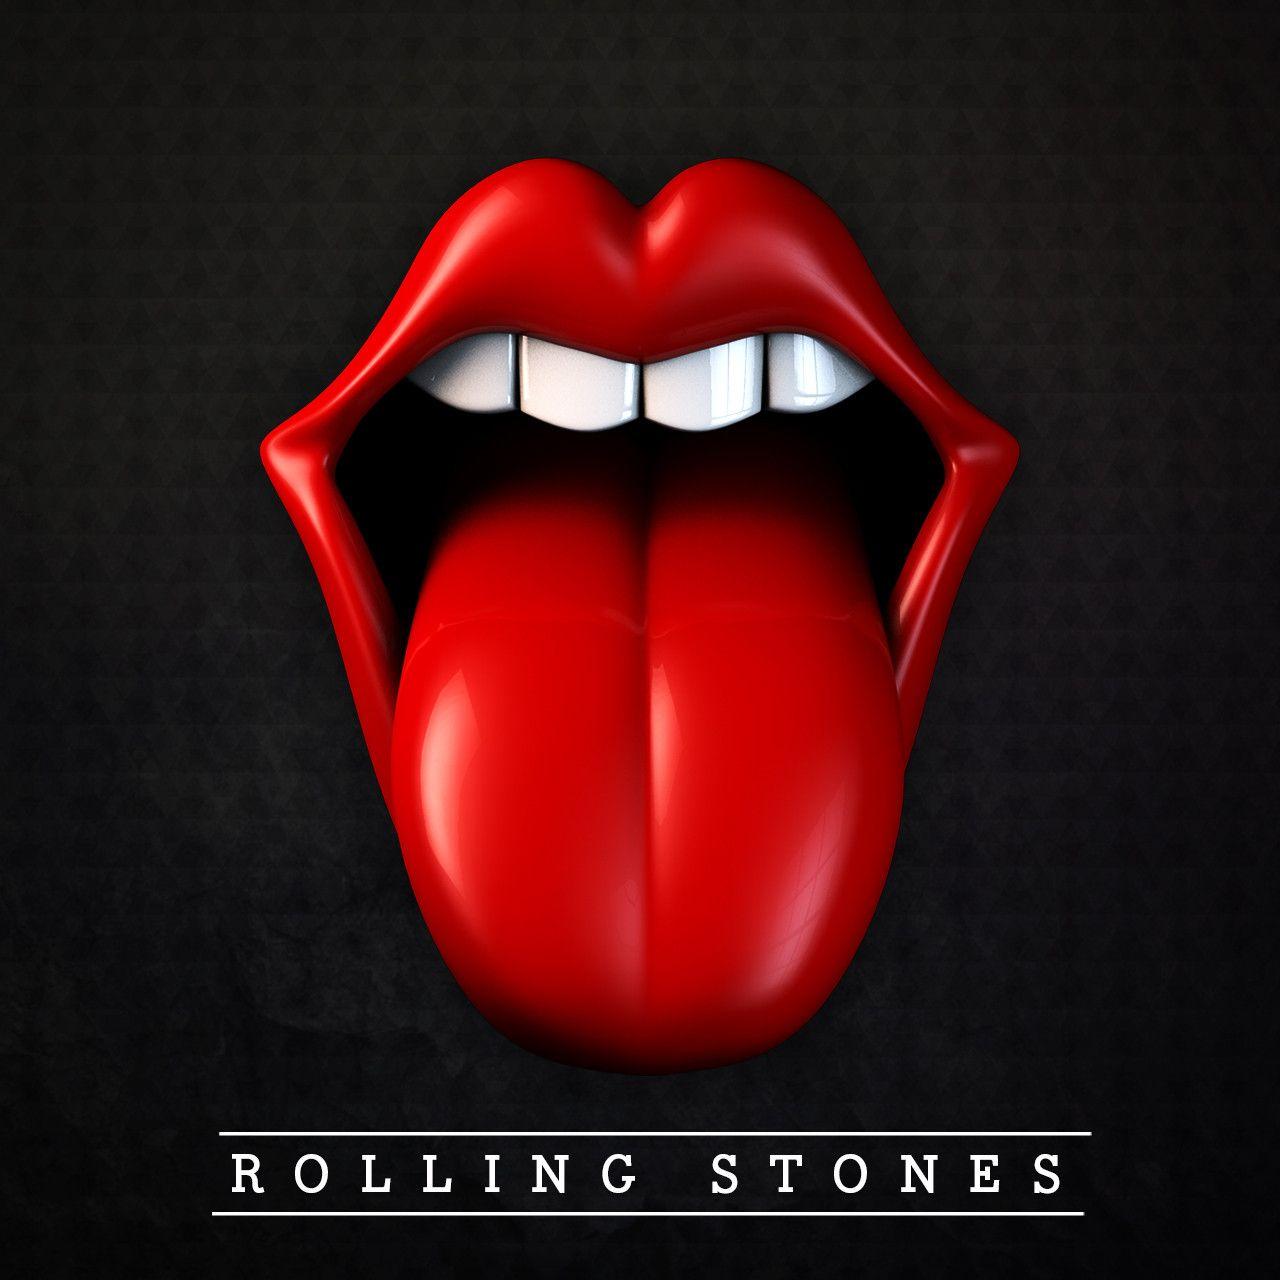 Rolling Stones Logo Wallpaper, Rolling Stones Wallpaper